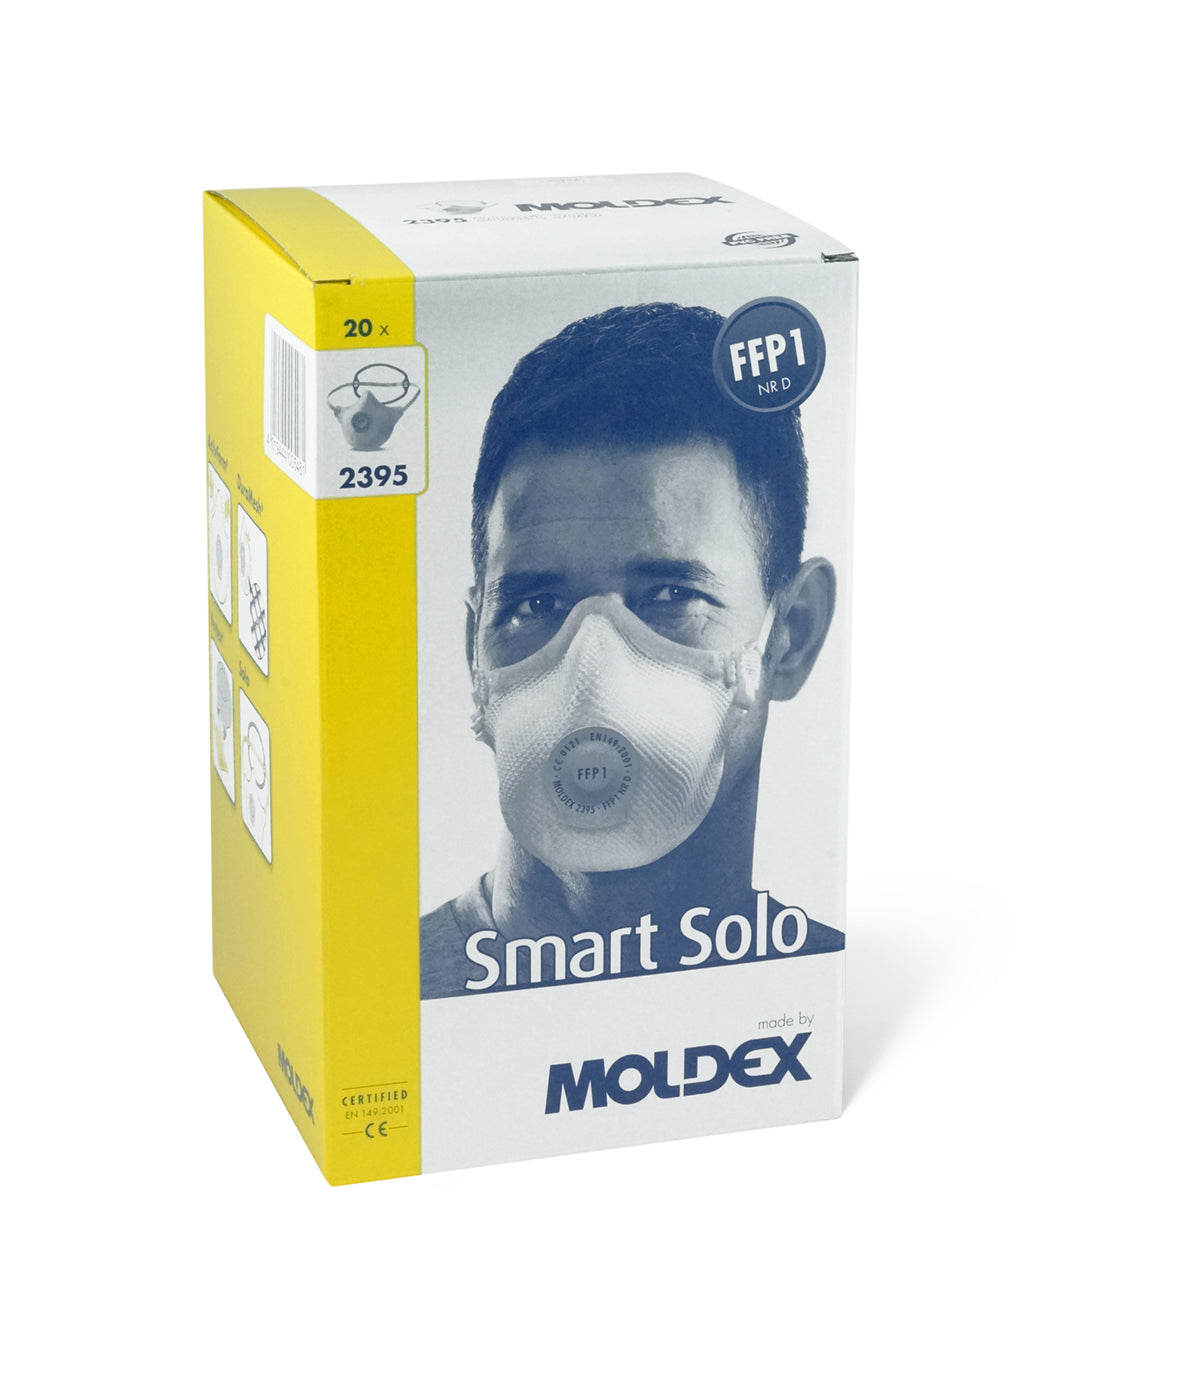 Moldex 2395 Smart Solo FFP1 valved mask (Box of 20) - DaltonSafety